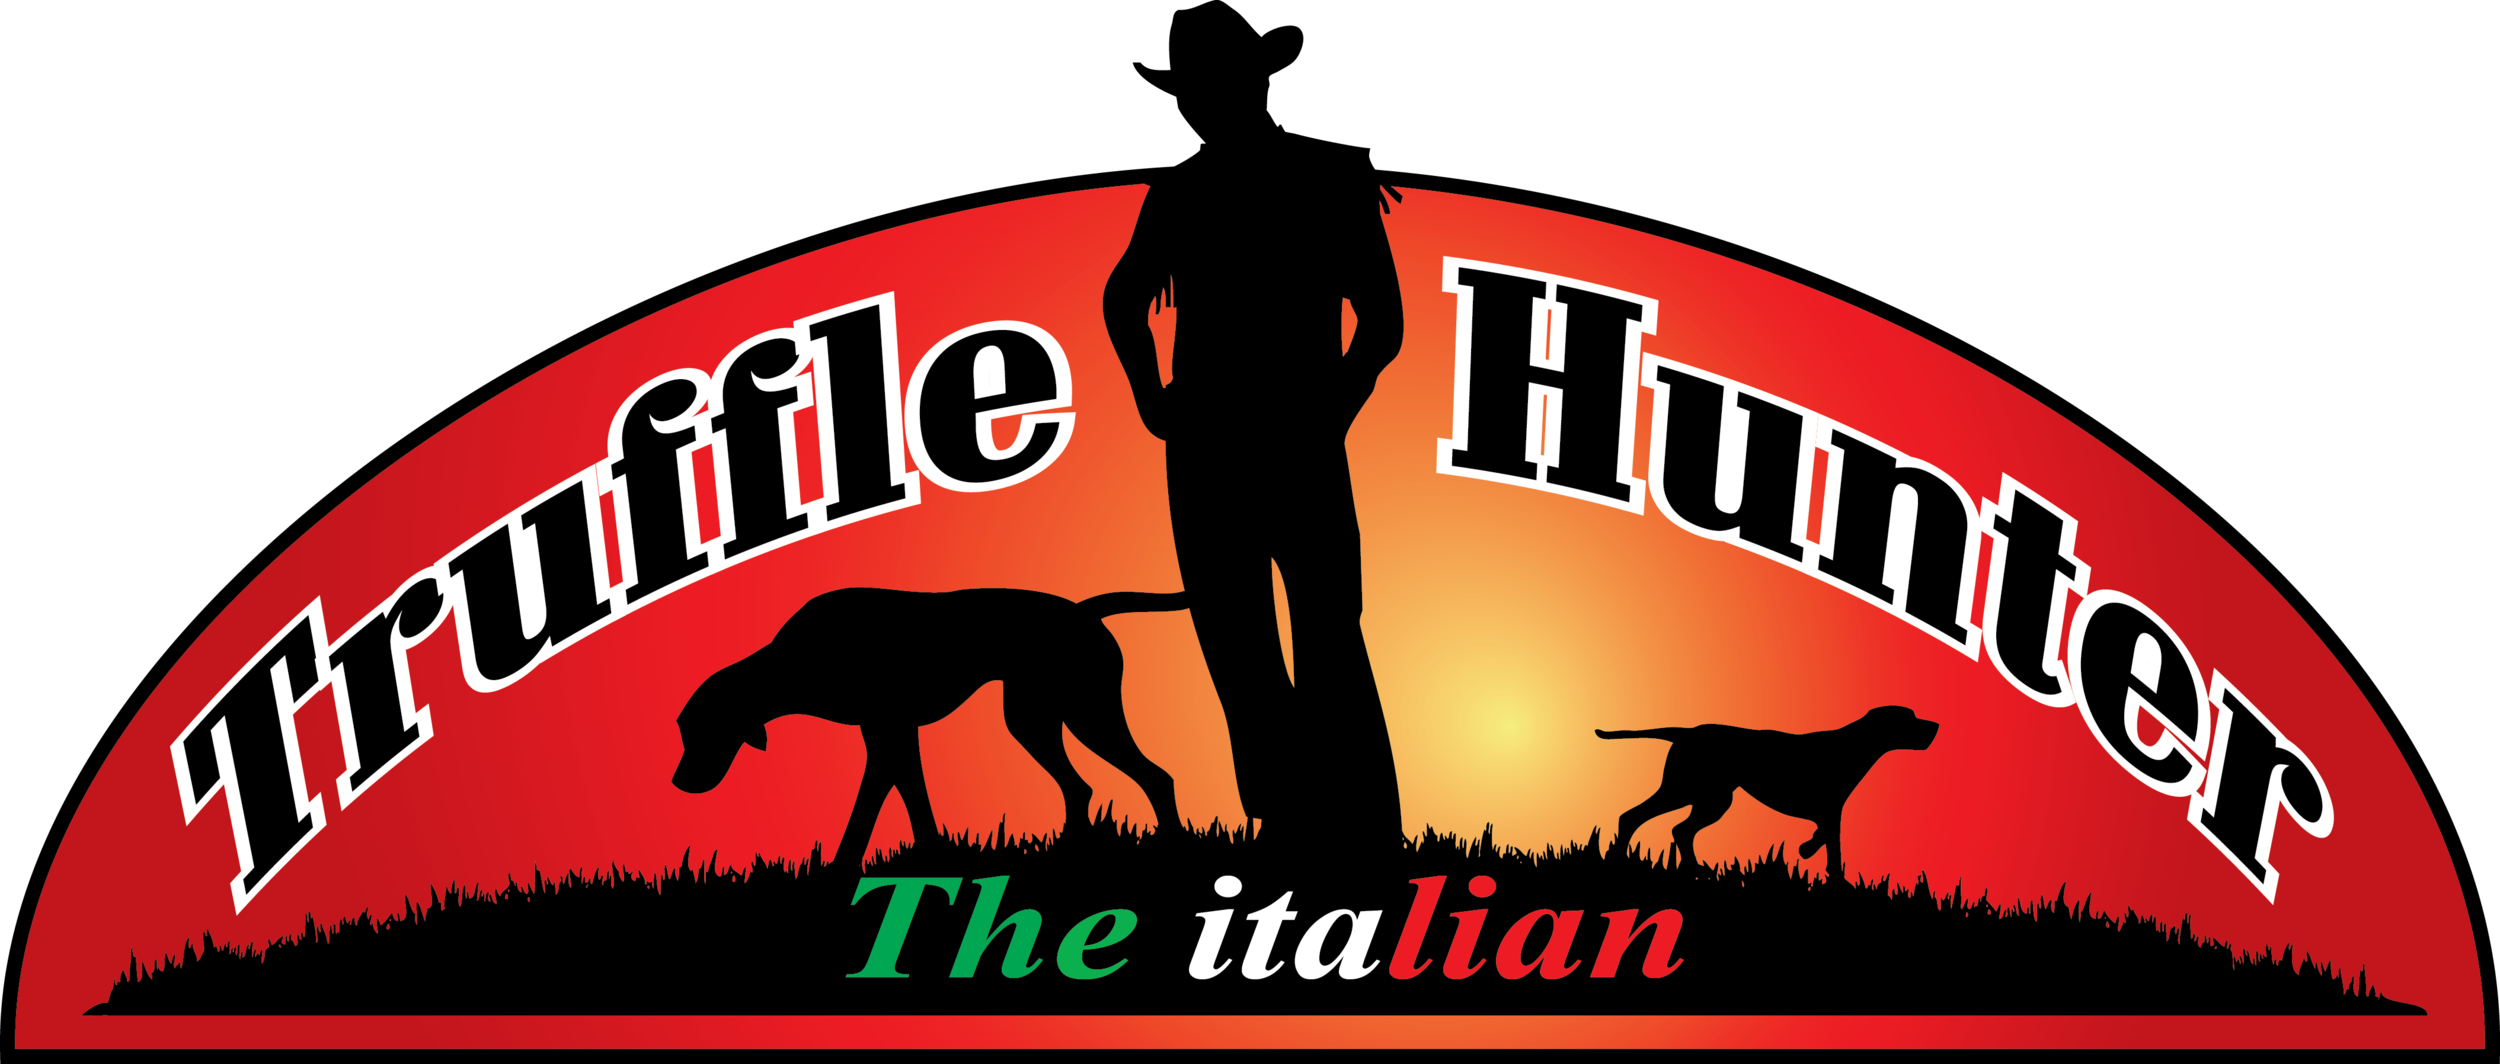 The Truffle Hunter